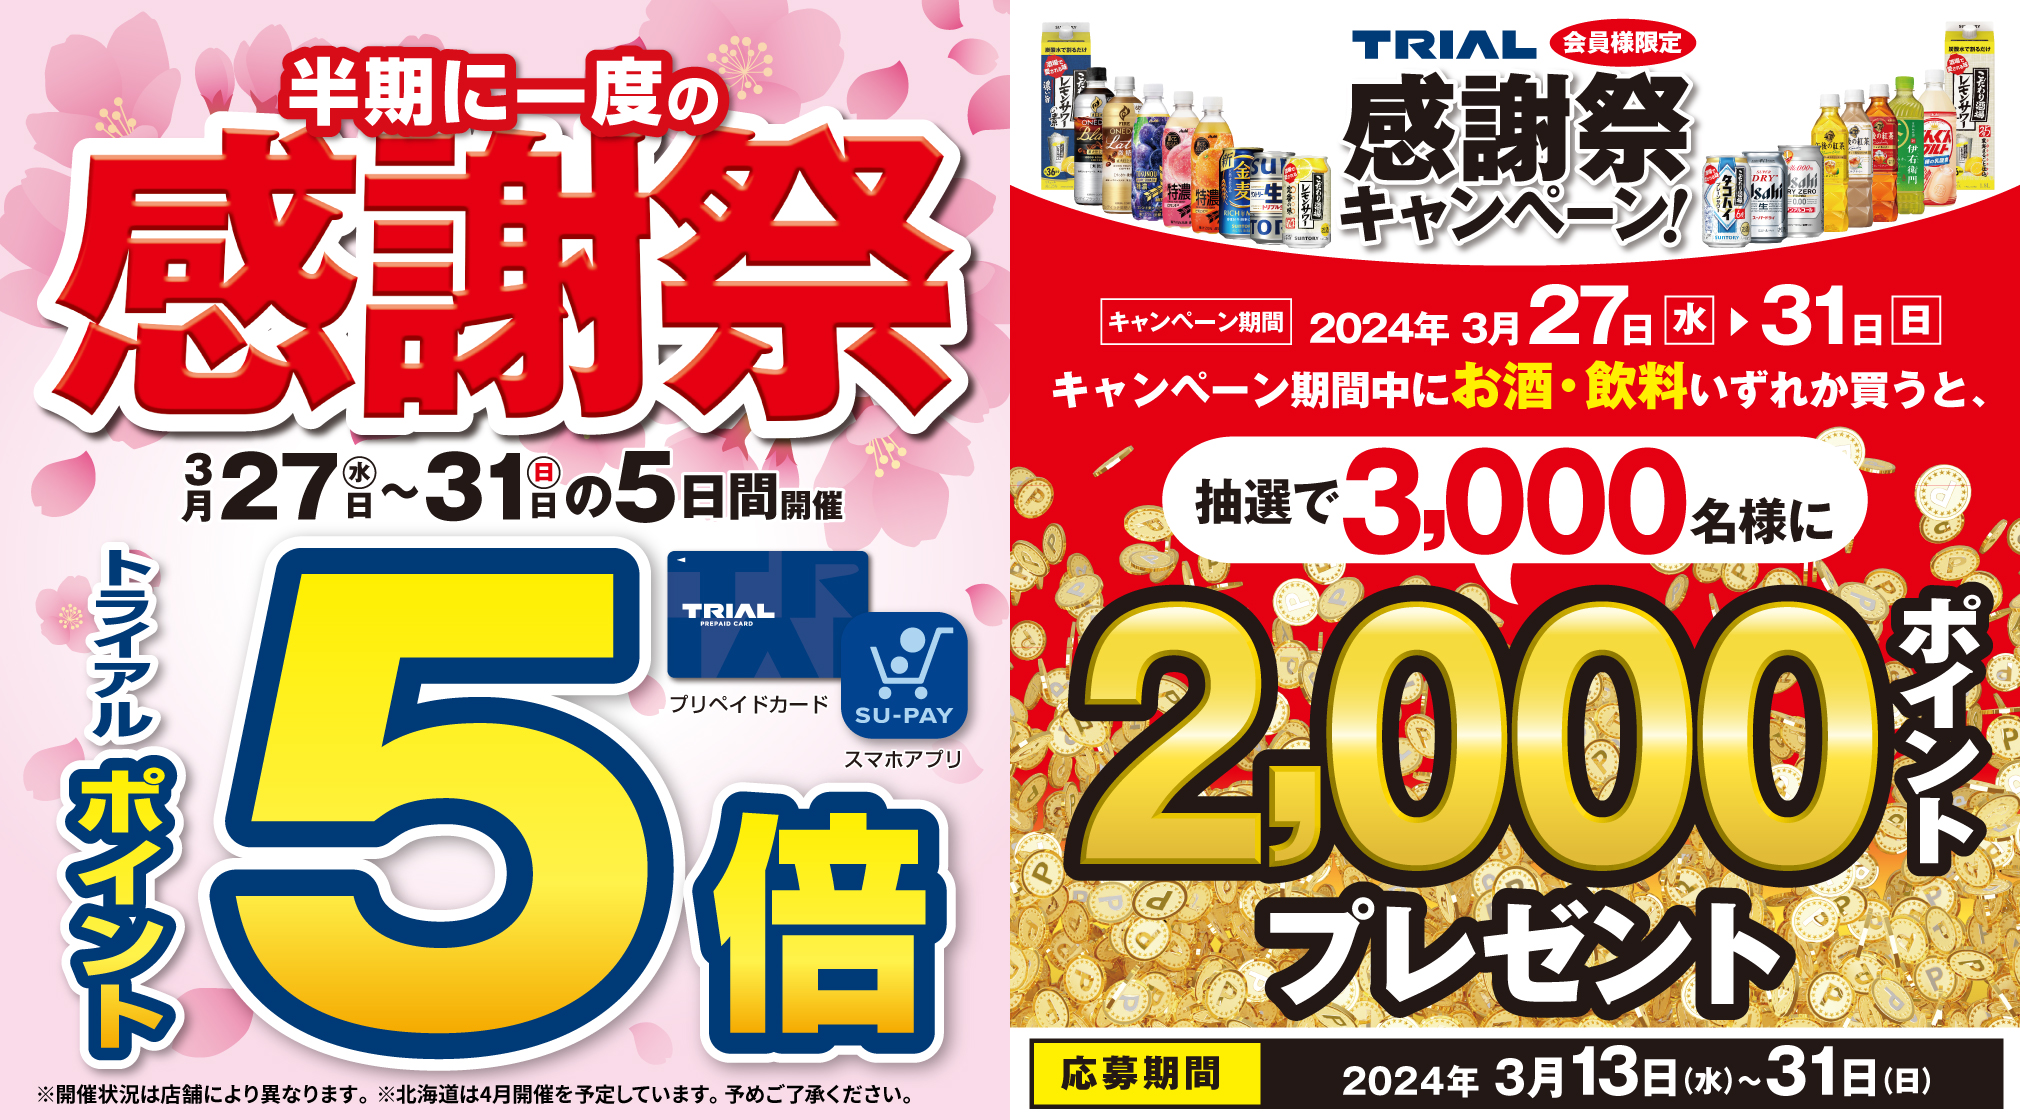 http://trial-website-dev.retail-ai.jp/lp/kansyasai202403?utm_source=HP&utm_medium=main&utm_campaign=CP&utm_content=kansyasai202403